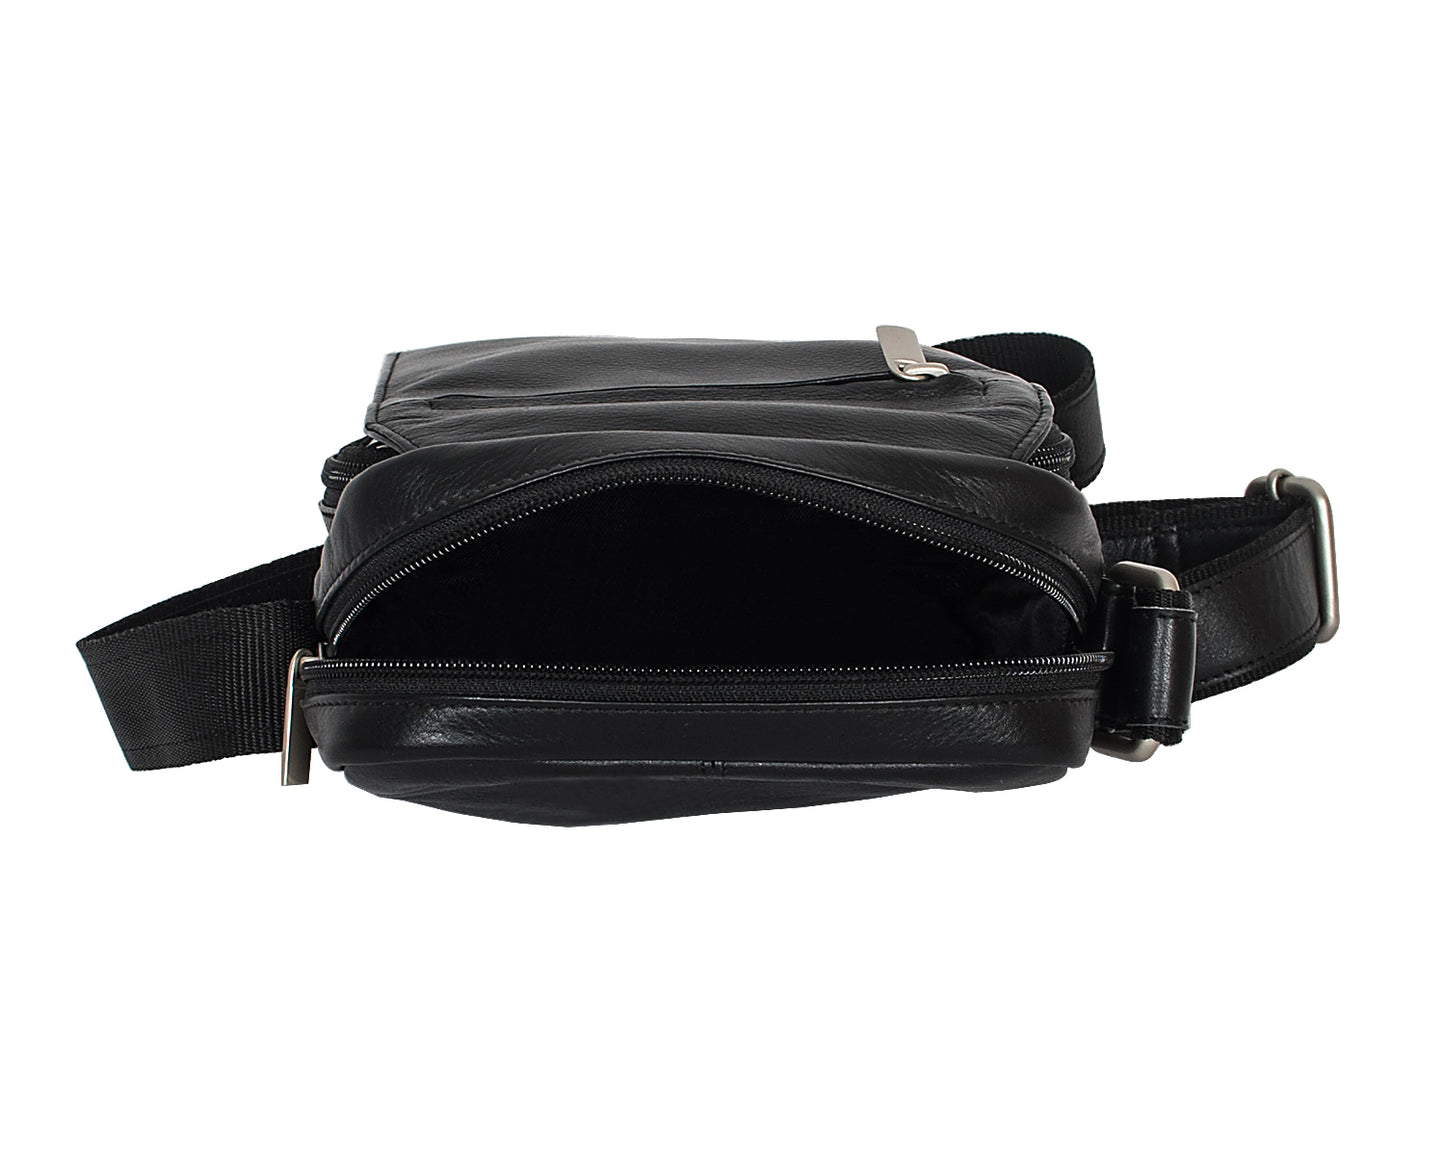 Calfnero Genuine Leather Men's Cross Body Bag (2217-Black)